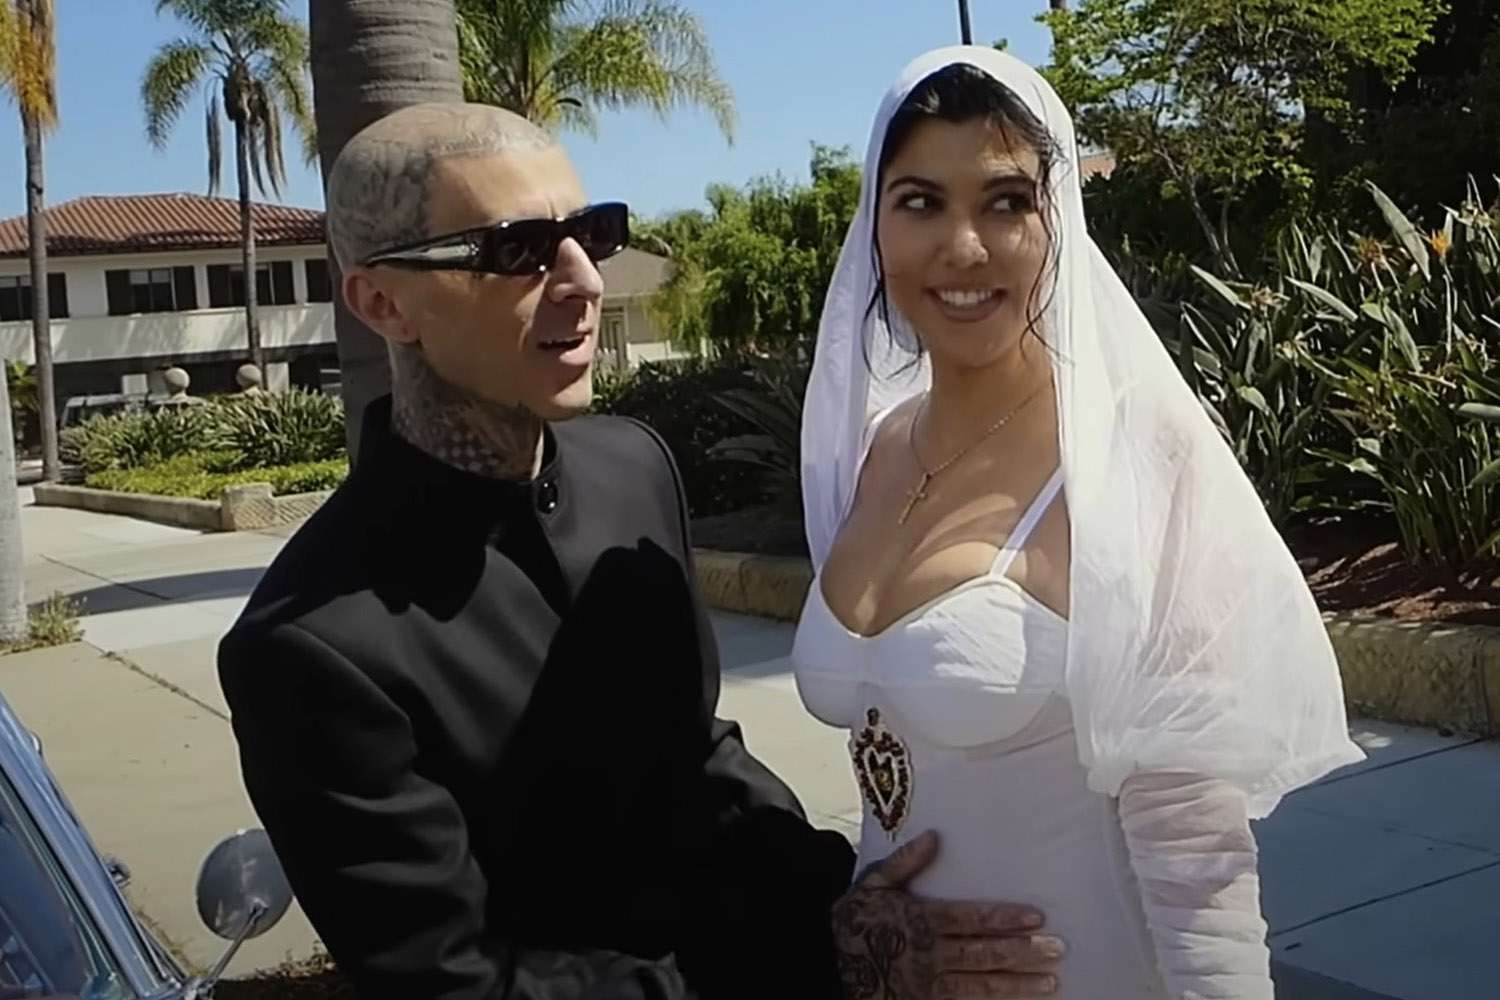 Kourtney Kardashian and Travis Barker Mark Second Anniversary of Courthouse Wedding: ‘2 Years Ago in Santa Barbara’